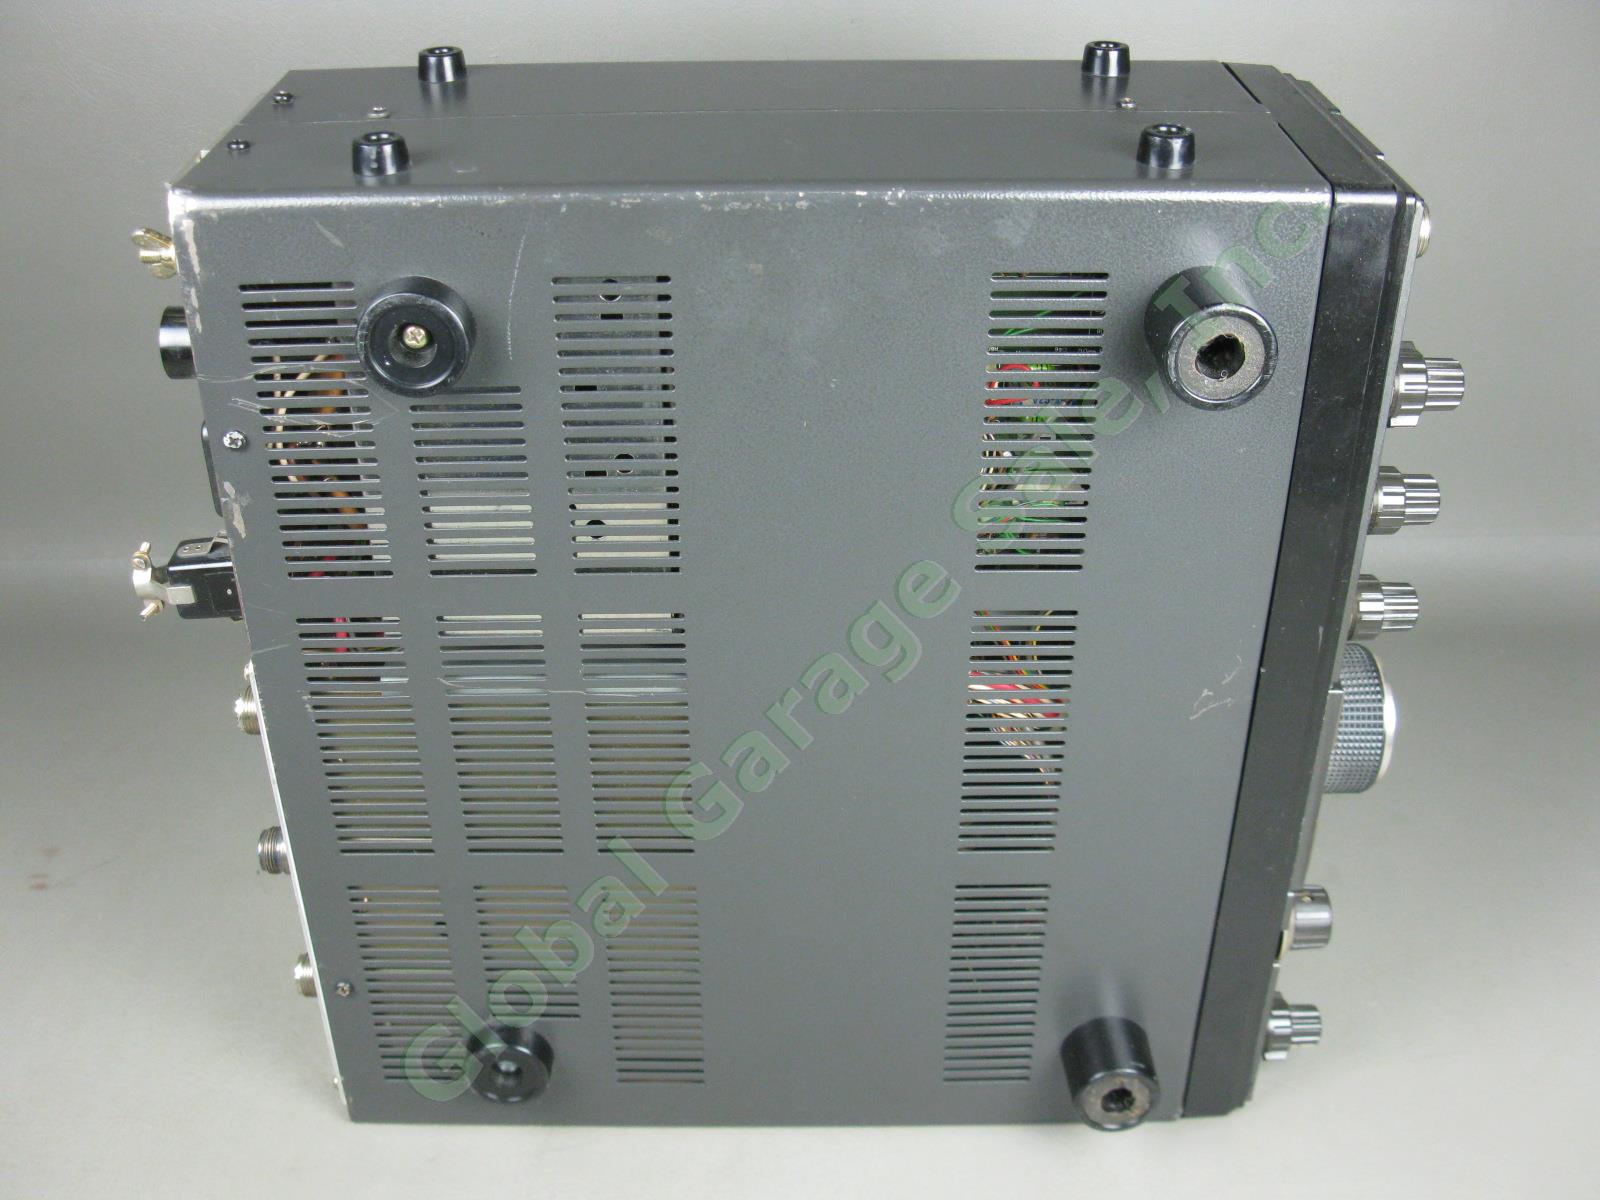 Yaesu FT-726R V/UHF All Mode Tribander Ham Radio Transceiver + YM-48 Mic Tested+ 8